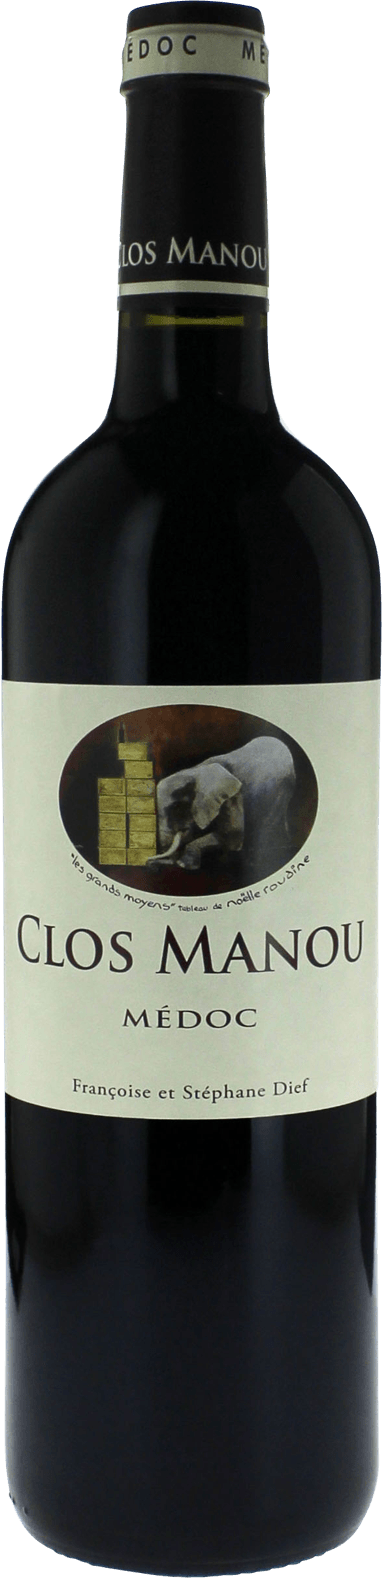 Clos manou 2014 Cru Bourgeois Mdoc, Slection Bordeaux Rouge